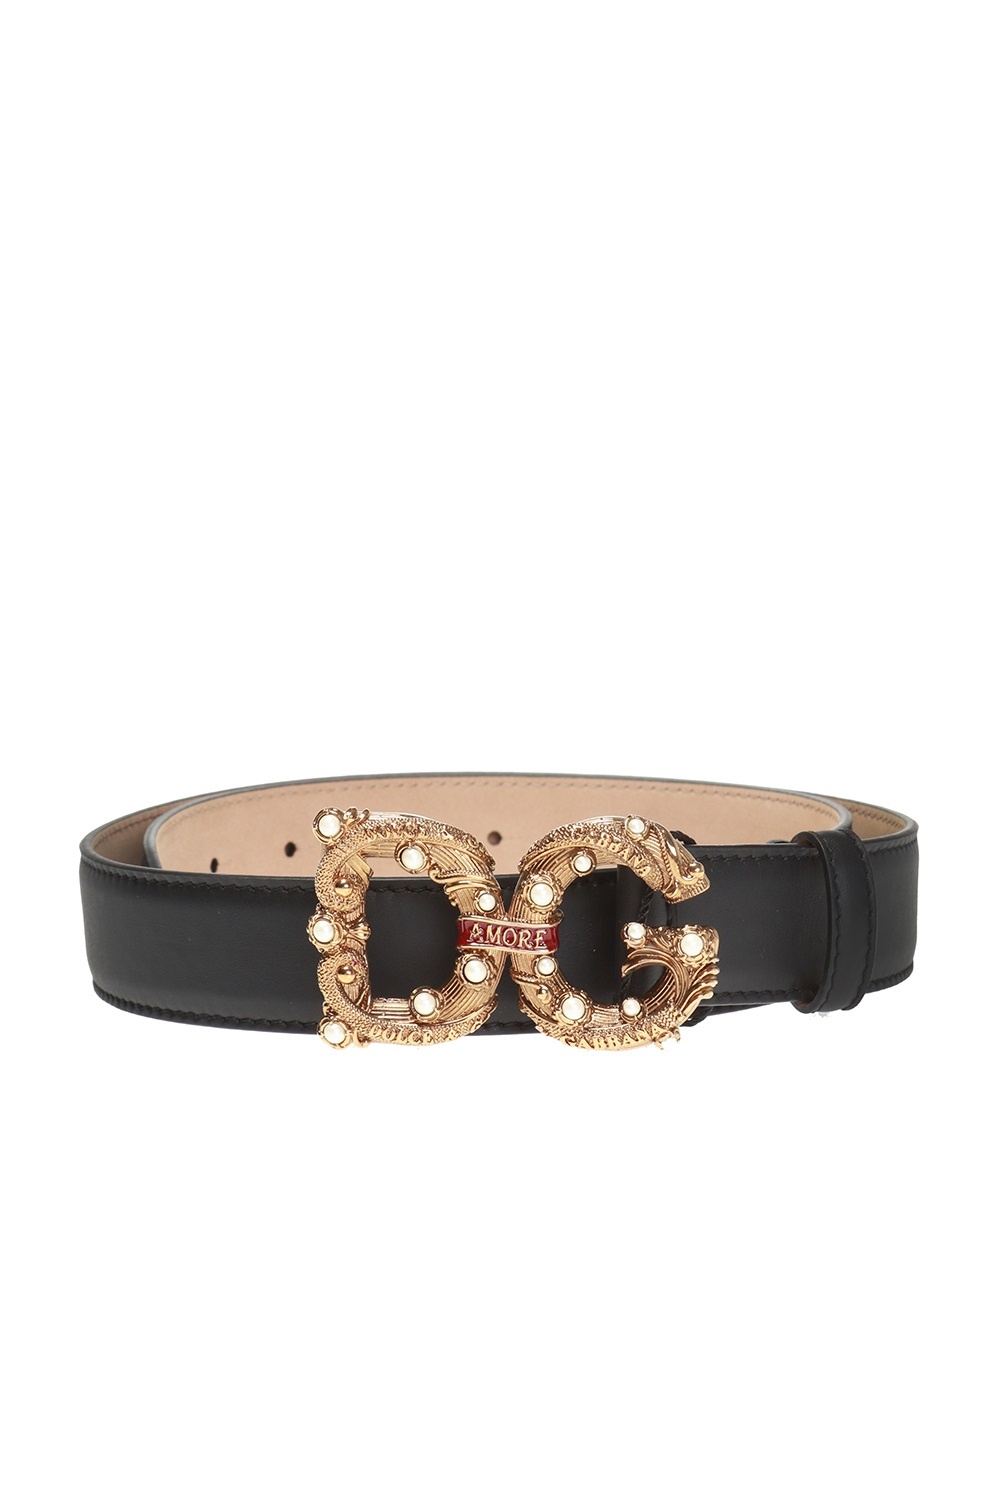 Women's Accessories | IetpShops | Dolce & Gabbana Sicily soft bag | Dolce & Gabbana  Belt with decorative buckle